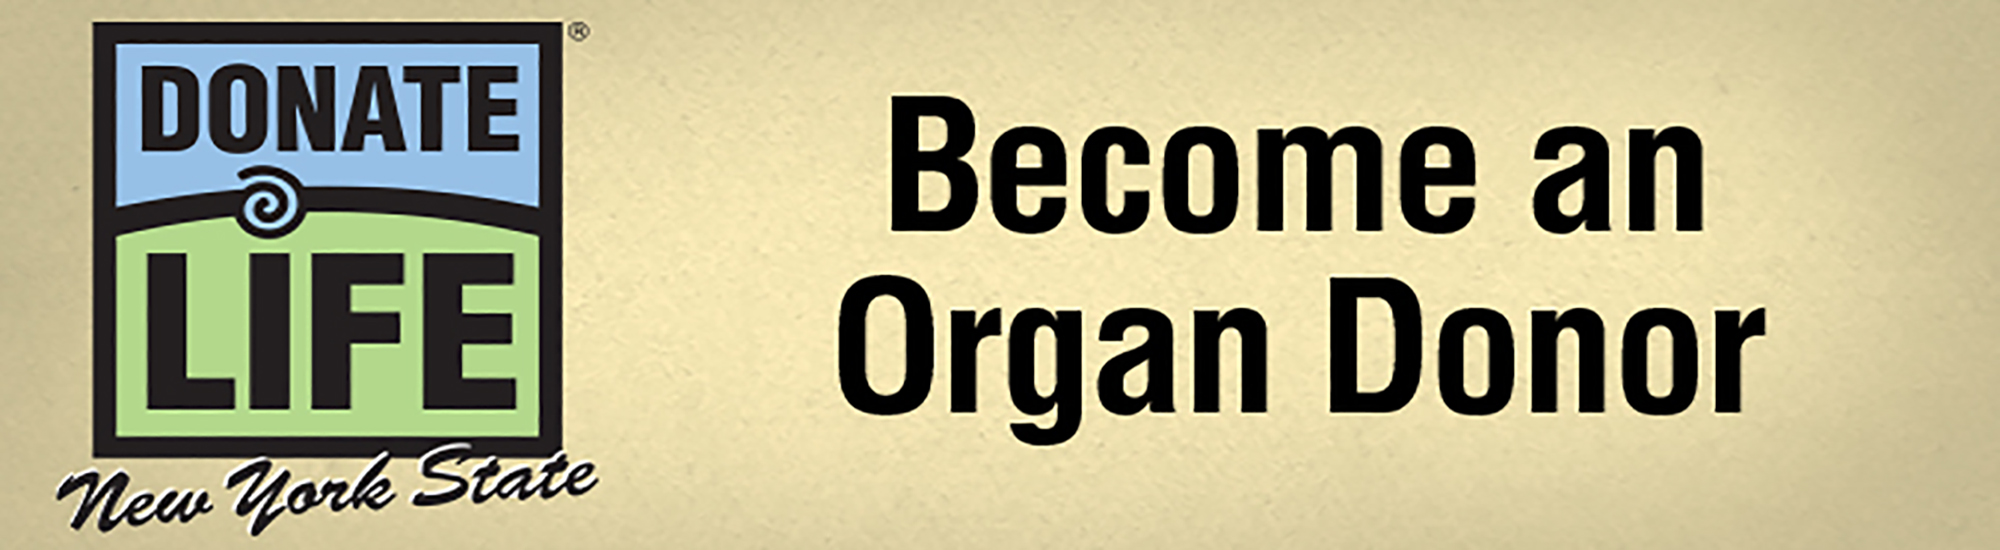 Donate Life Become An Organ Donor tan w/logo